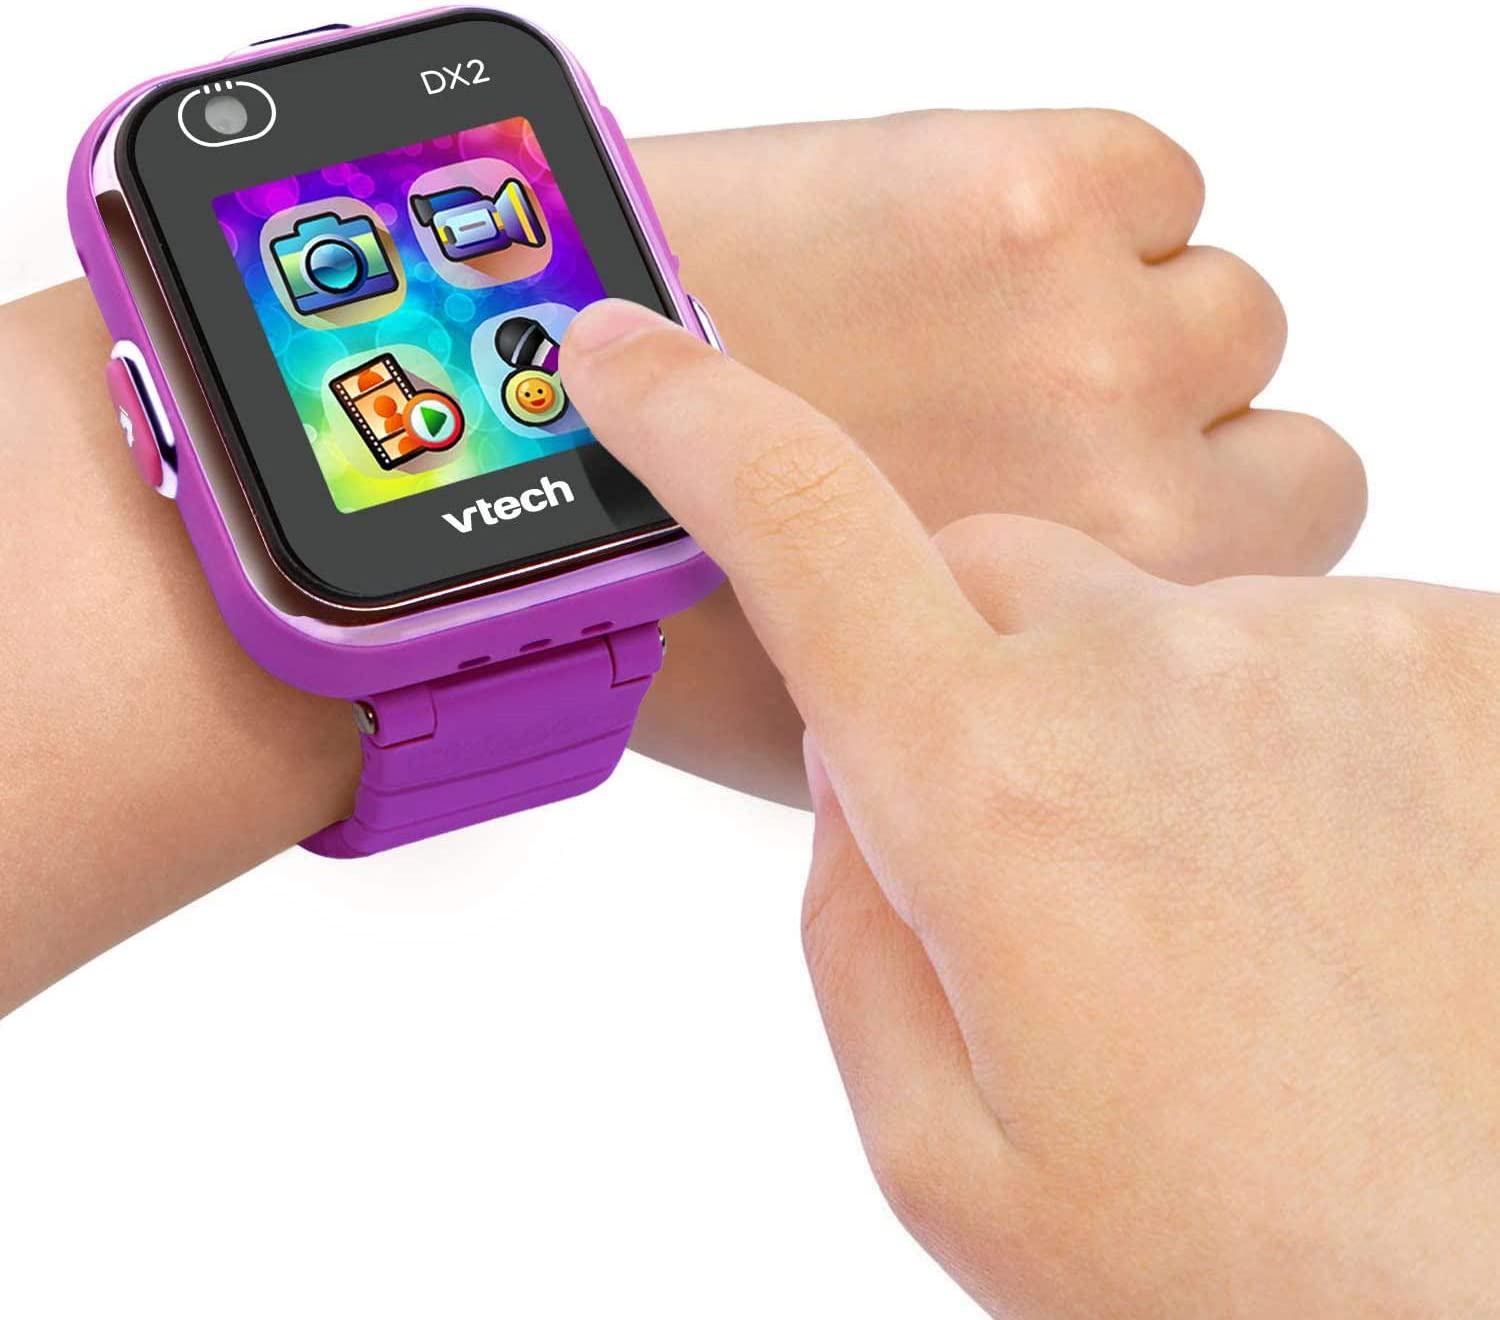 VTech KidiZoom Smartwatch DX2, Purple - Stylish, Kid-Friendly Design